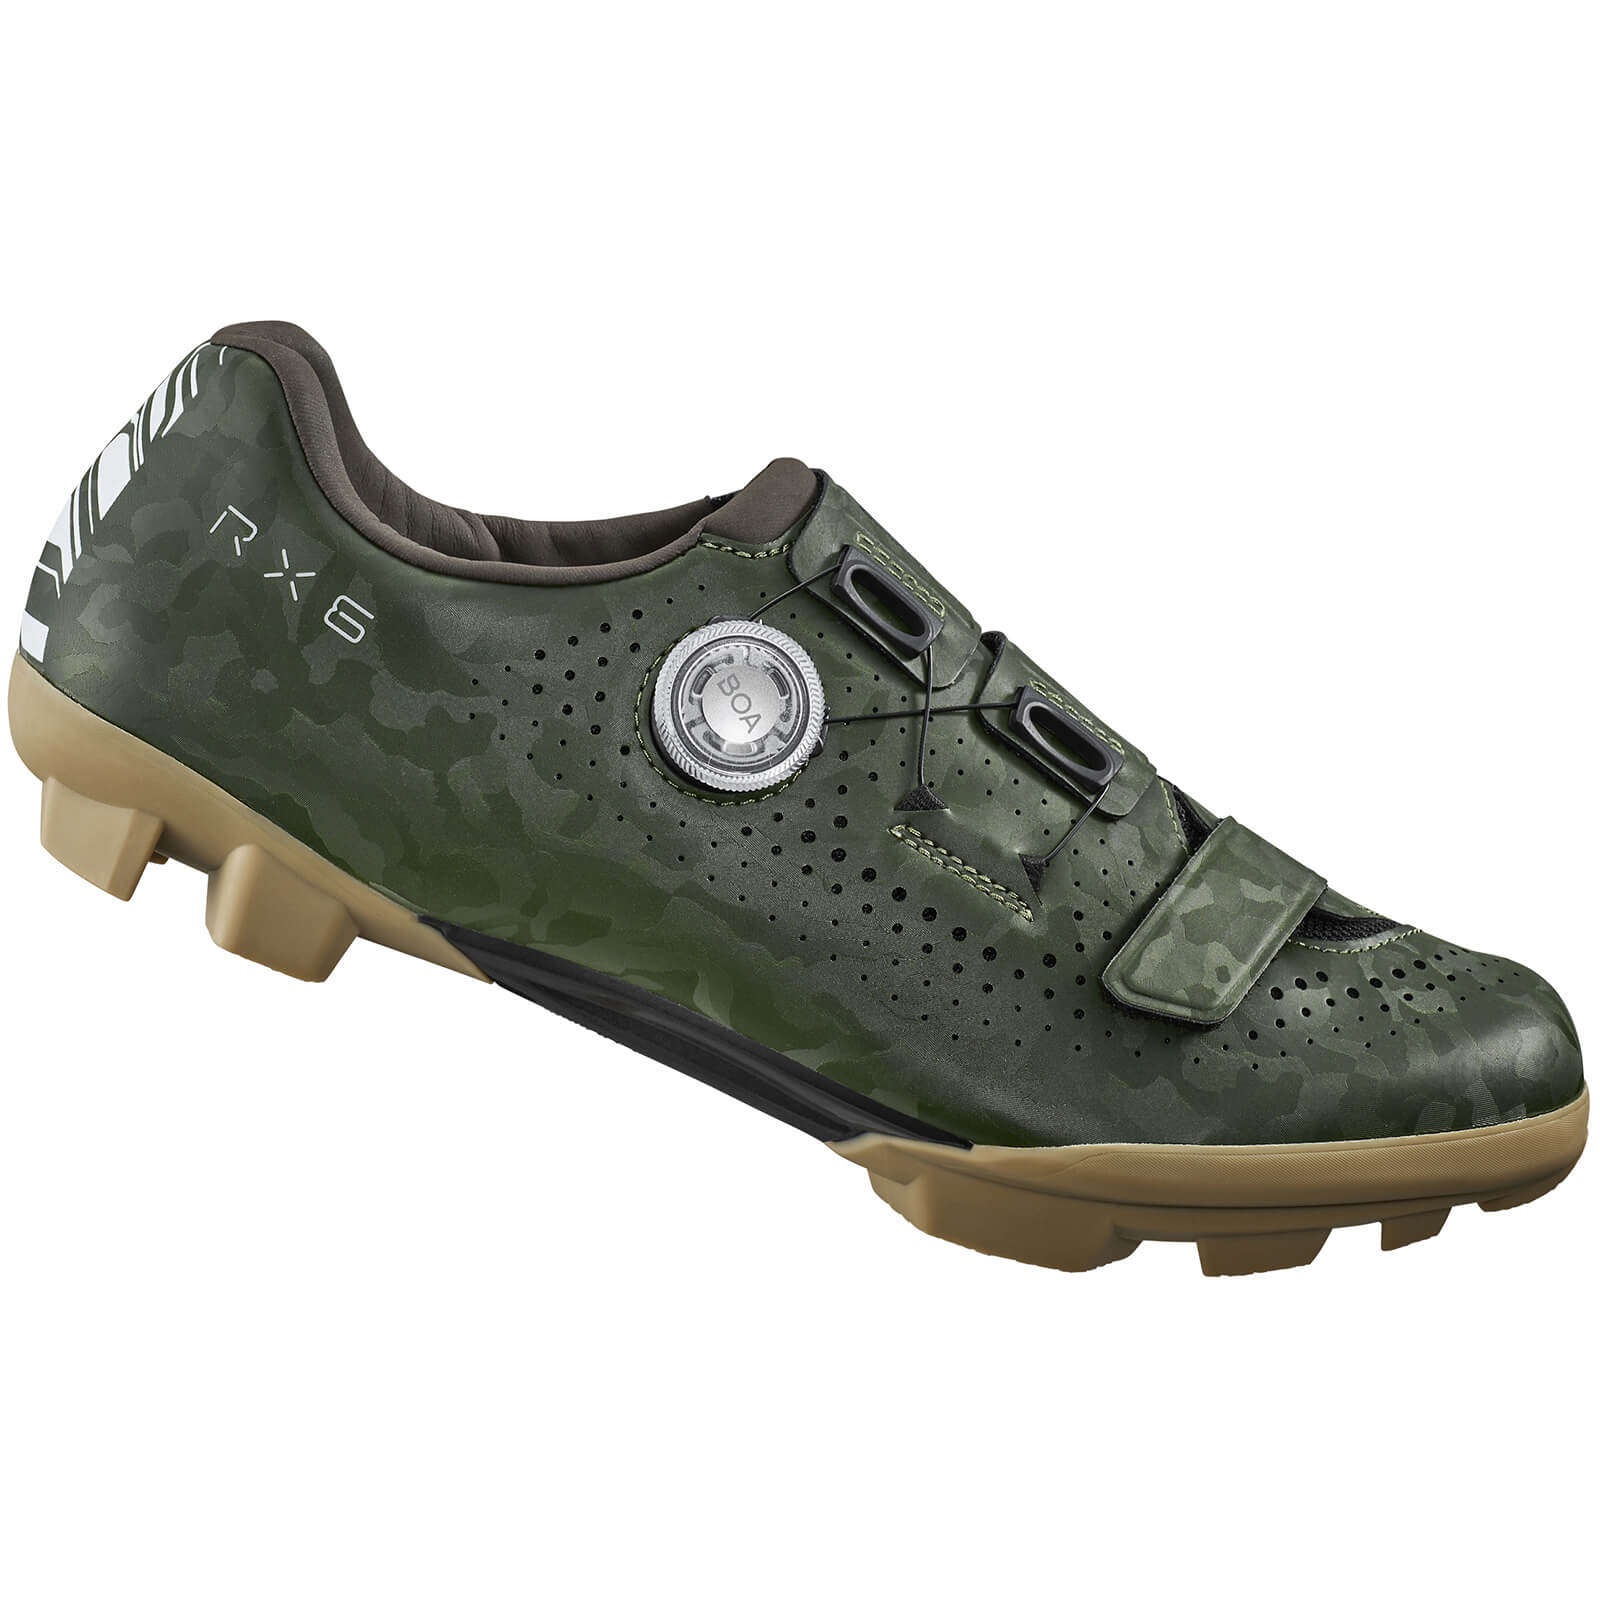 Shimano RX600 Gravel Cycling Shoes - 43 - Green